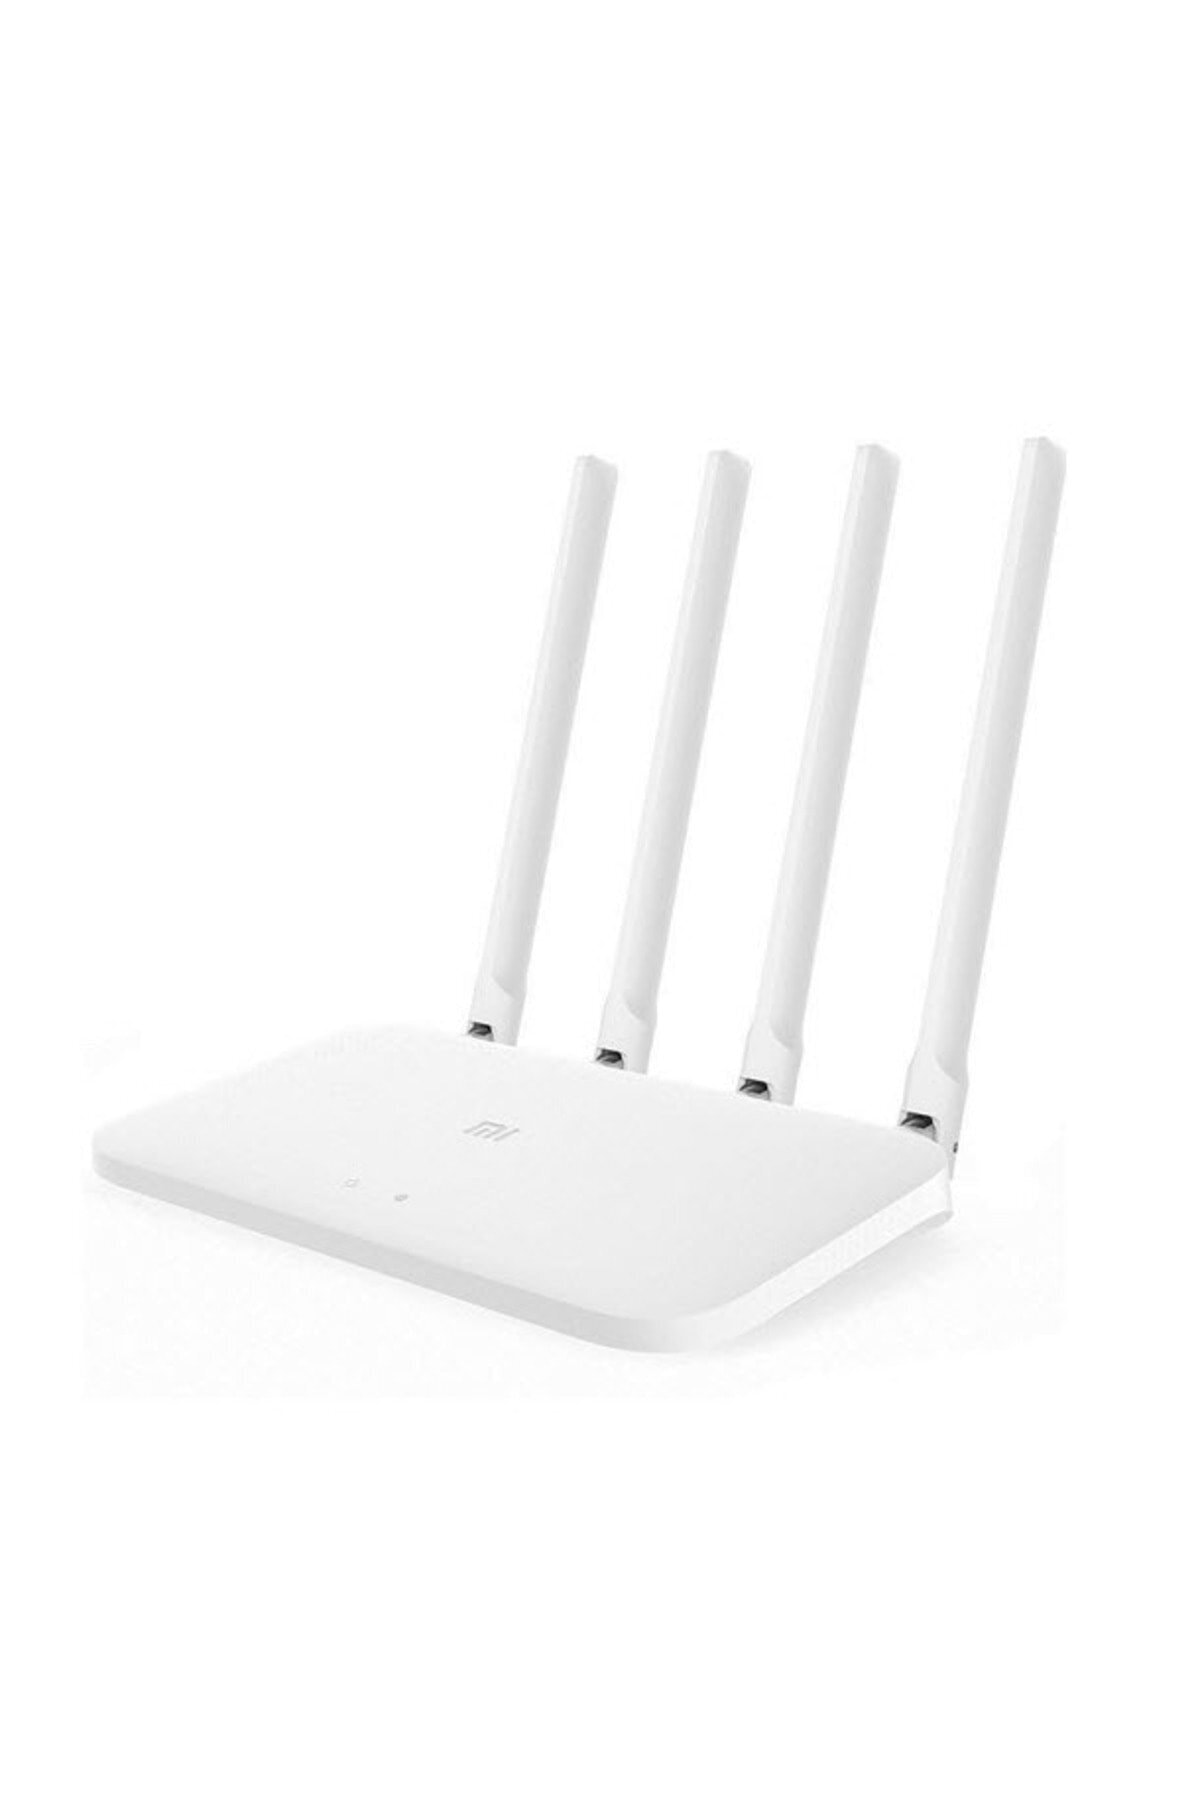 Mi WiFi AC1200 Router 4A Giga Version 1167 Mbps 2.4G 5G Çift Bant 4 Antenli